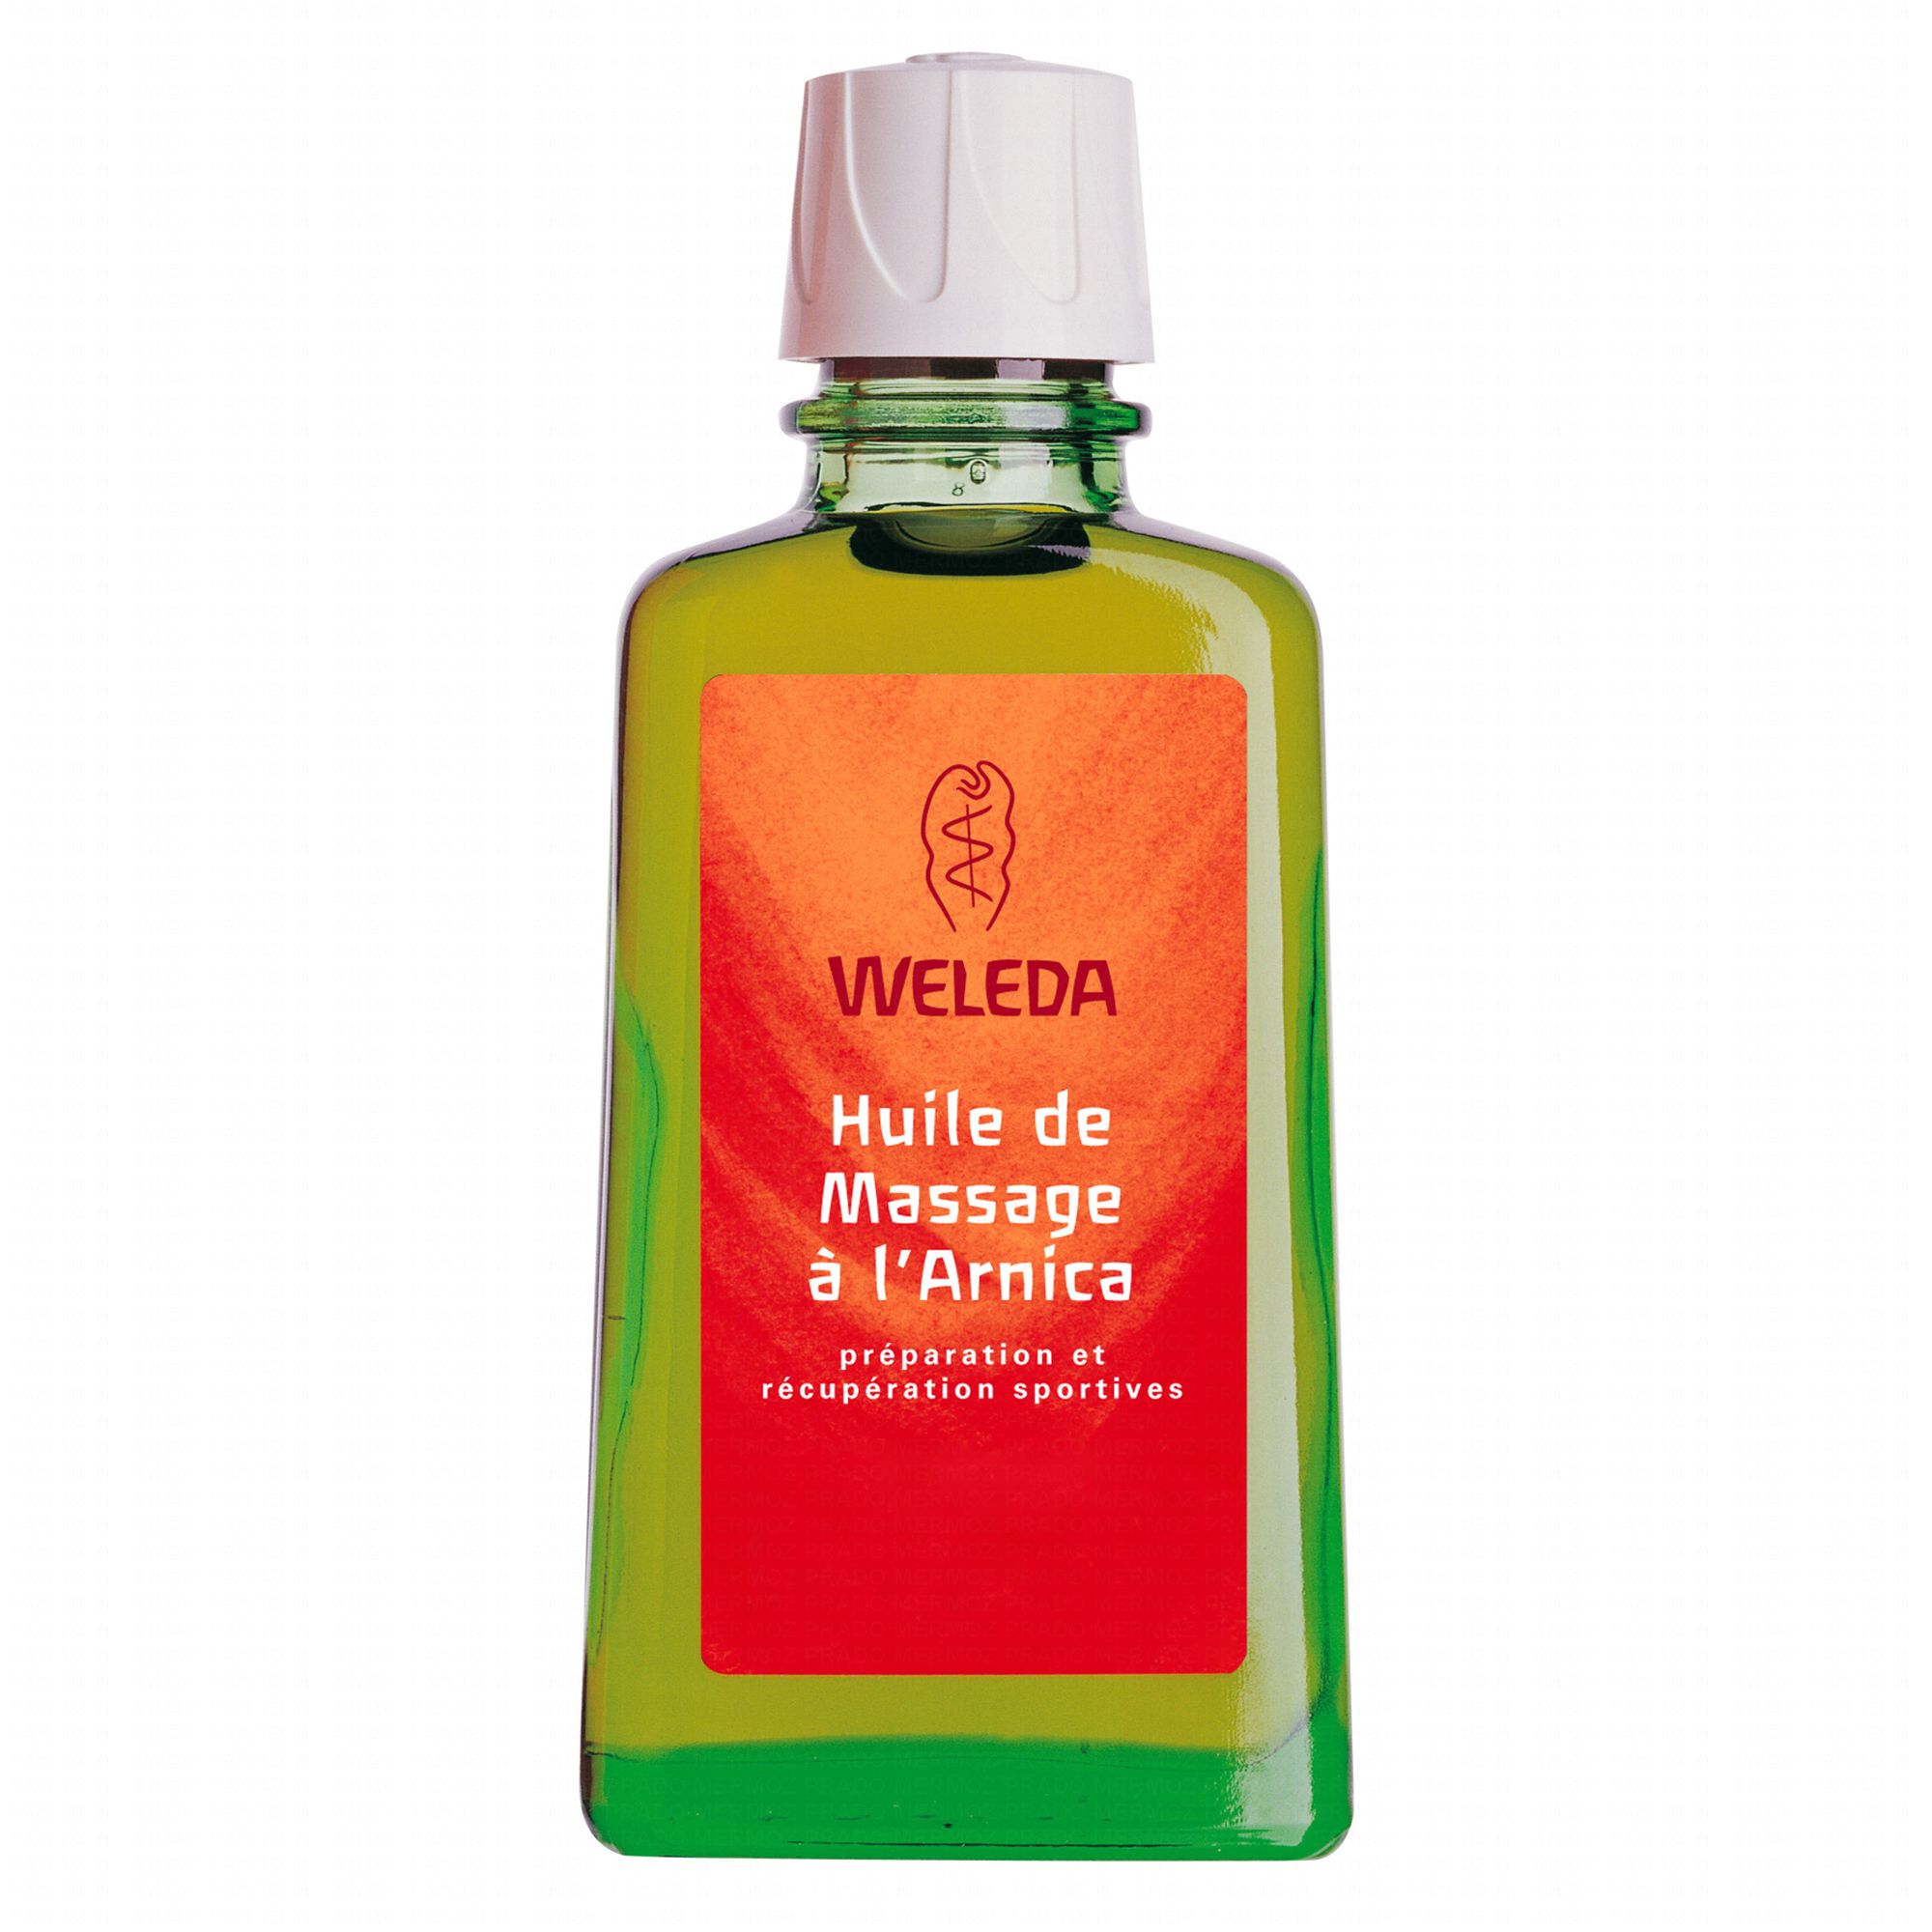 Weleda Huile de Massage Vergetures 100 ml - Redcare Pharmacie